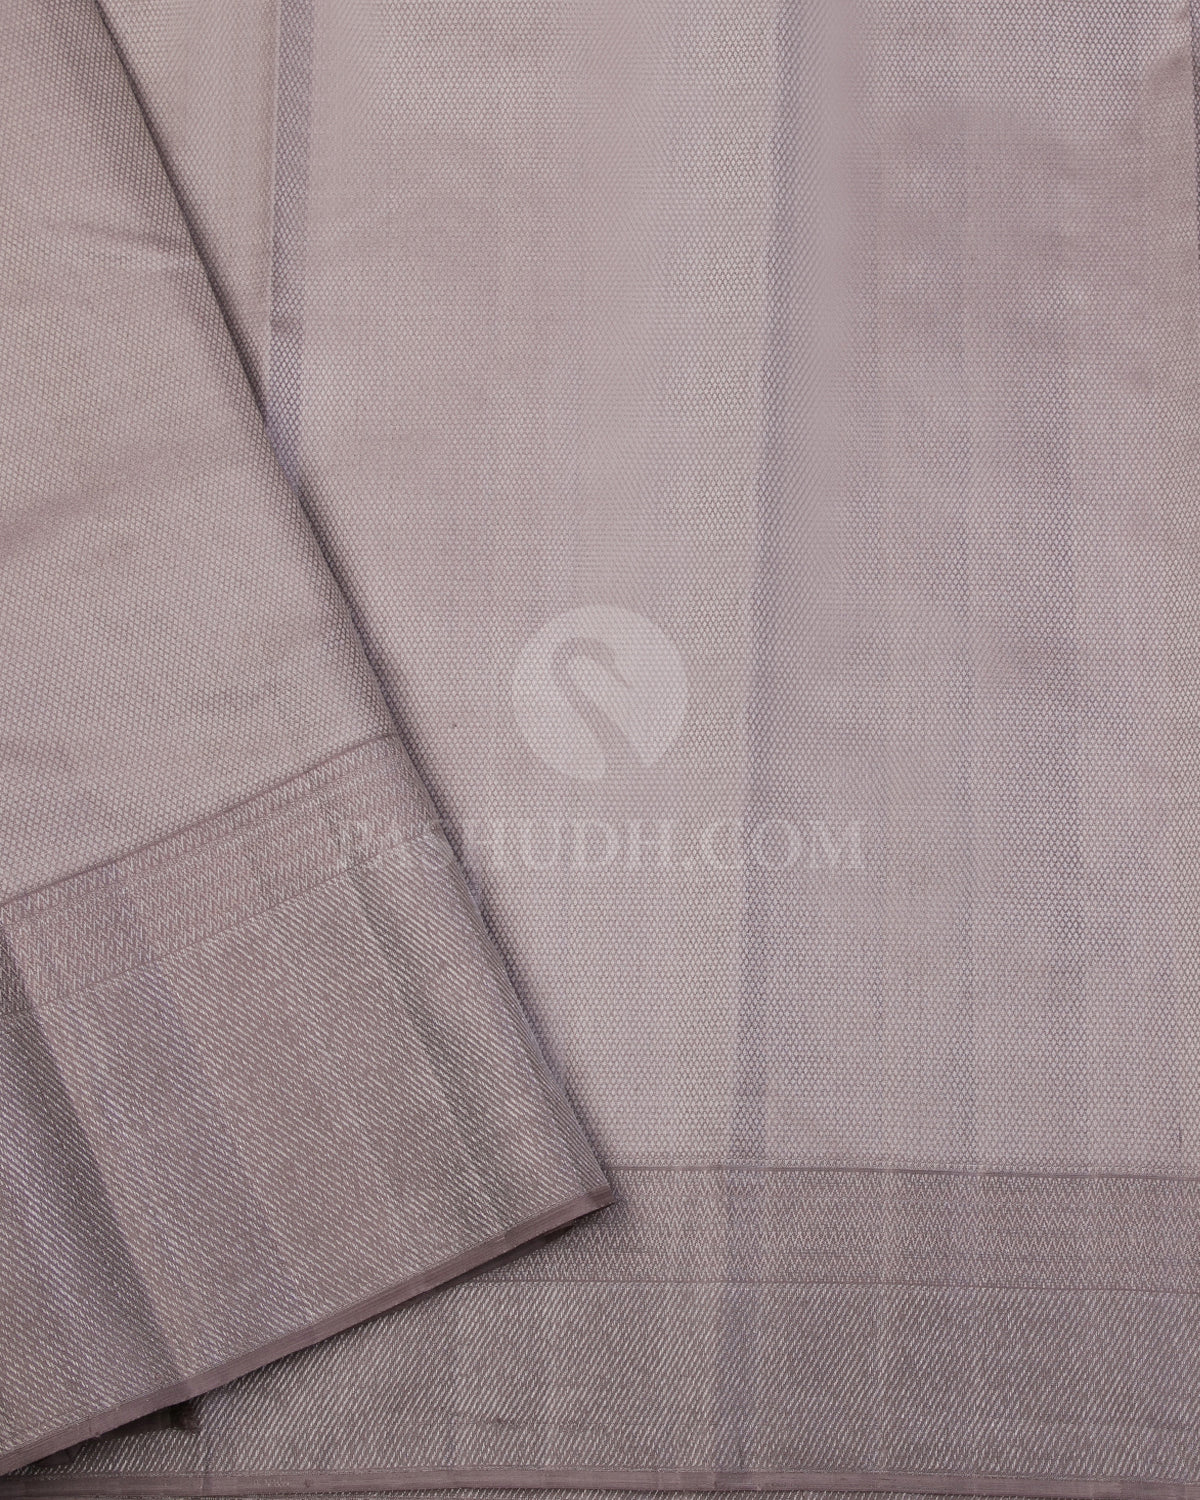 Steel Blue and Grey Kanjivaram Silk Saree - D510(A) - View 2